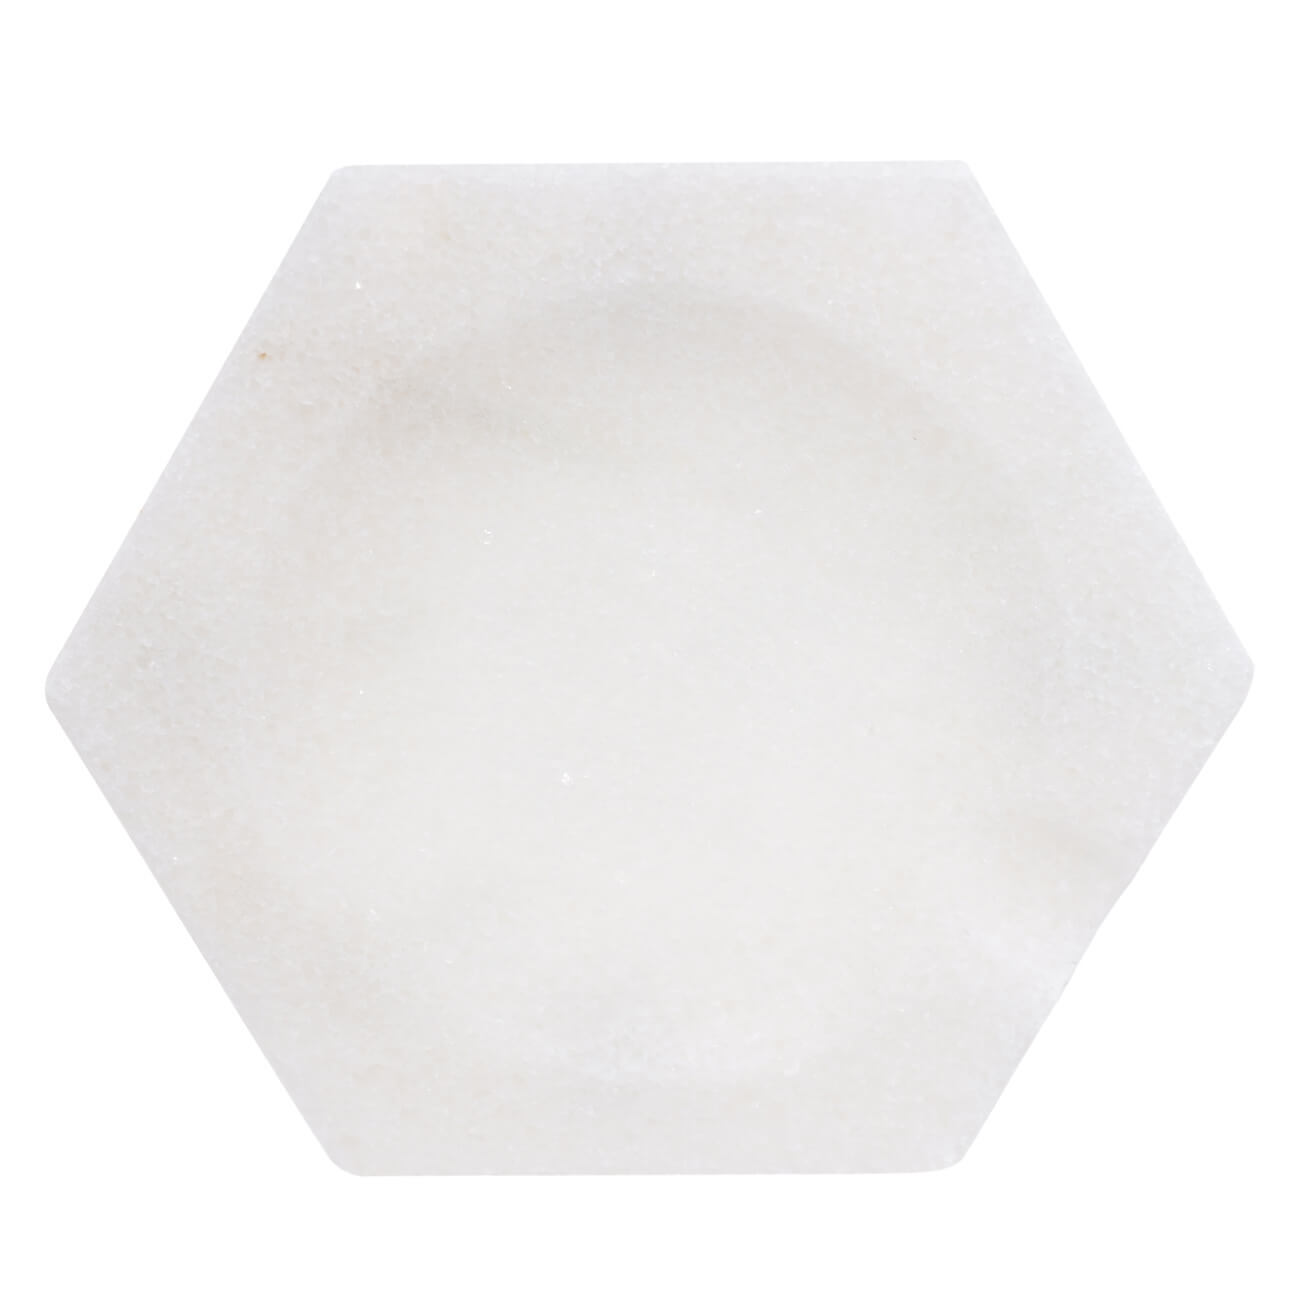 Подставка под ложку, 13х15 см, мрамор, белая, Шестигранник, Marble подсвечник шестигранник мрамор из гипса 9 7х11 3х1см серебро